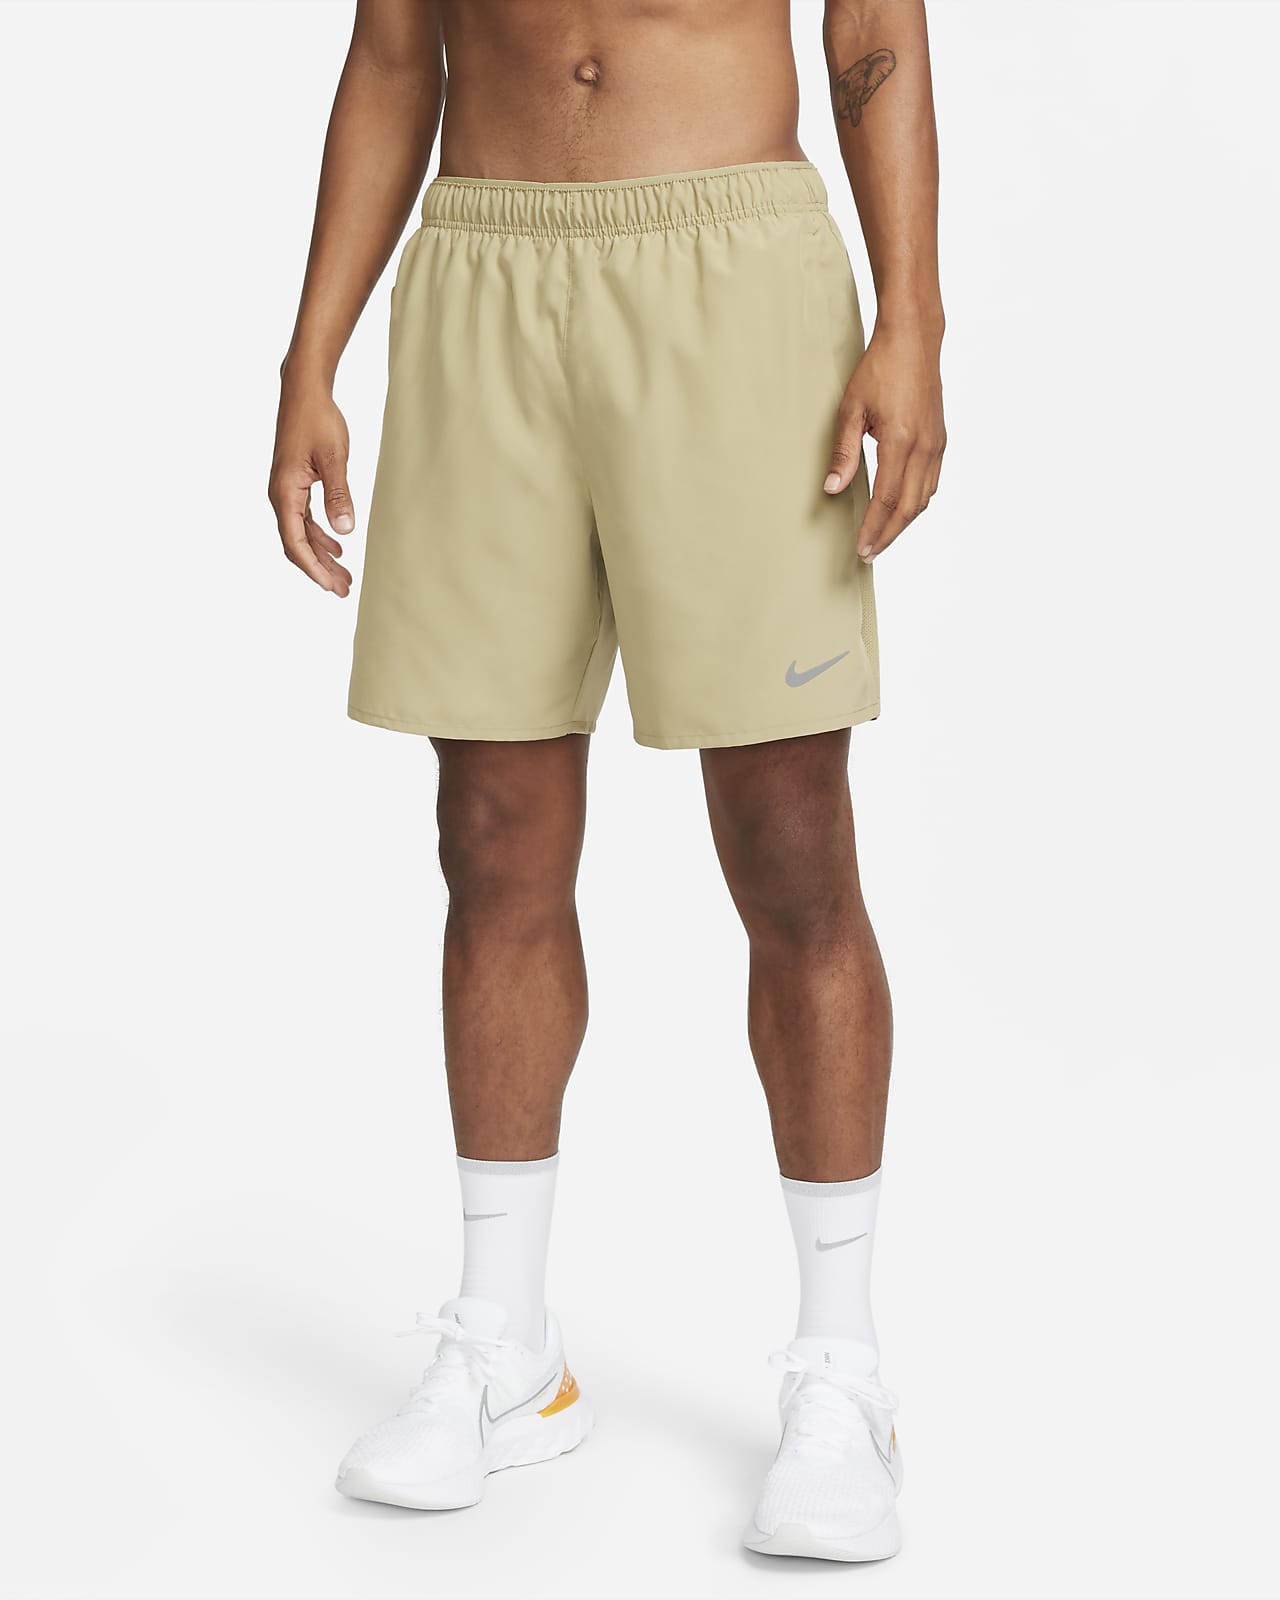 Shorts de running con forro de ropa interior Dri-FIT de 18 cm hombre Nike Challenger. Nike.com